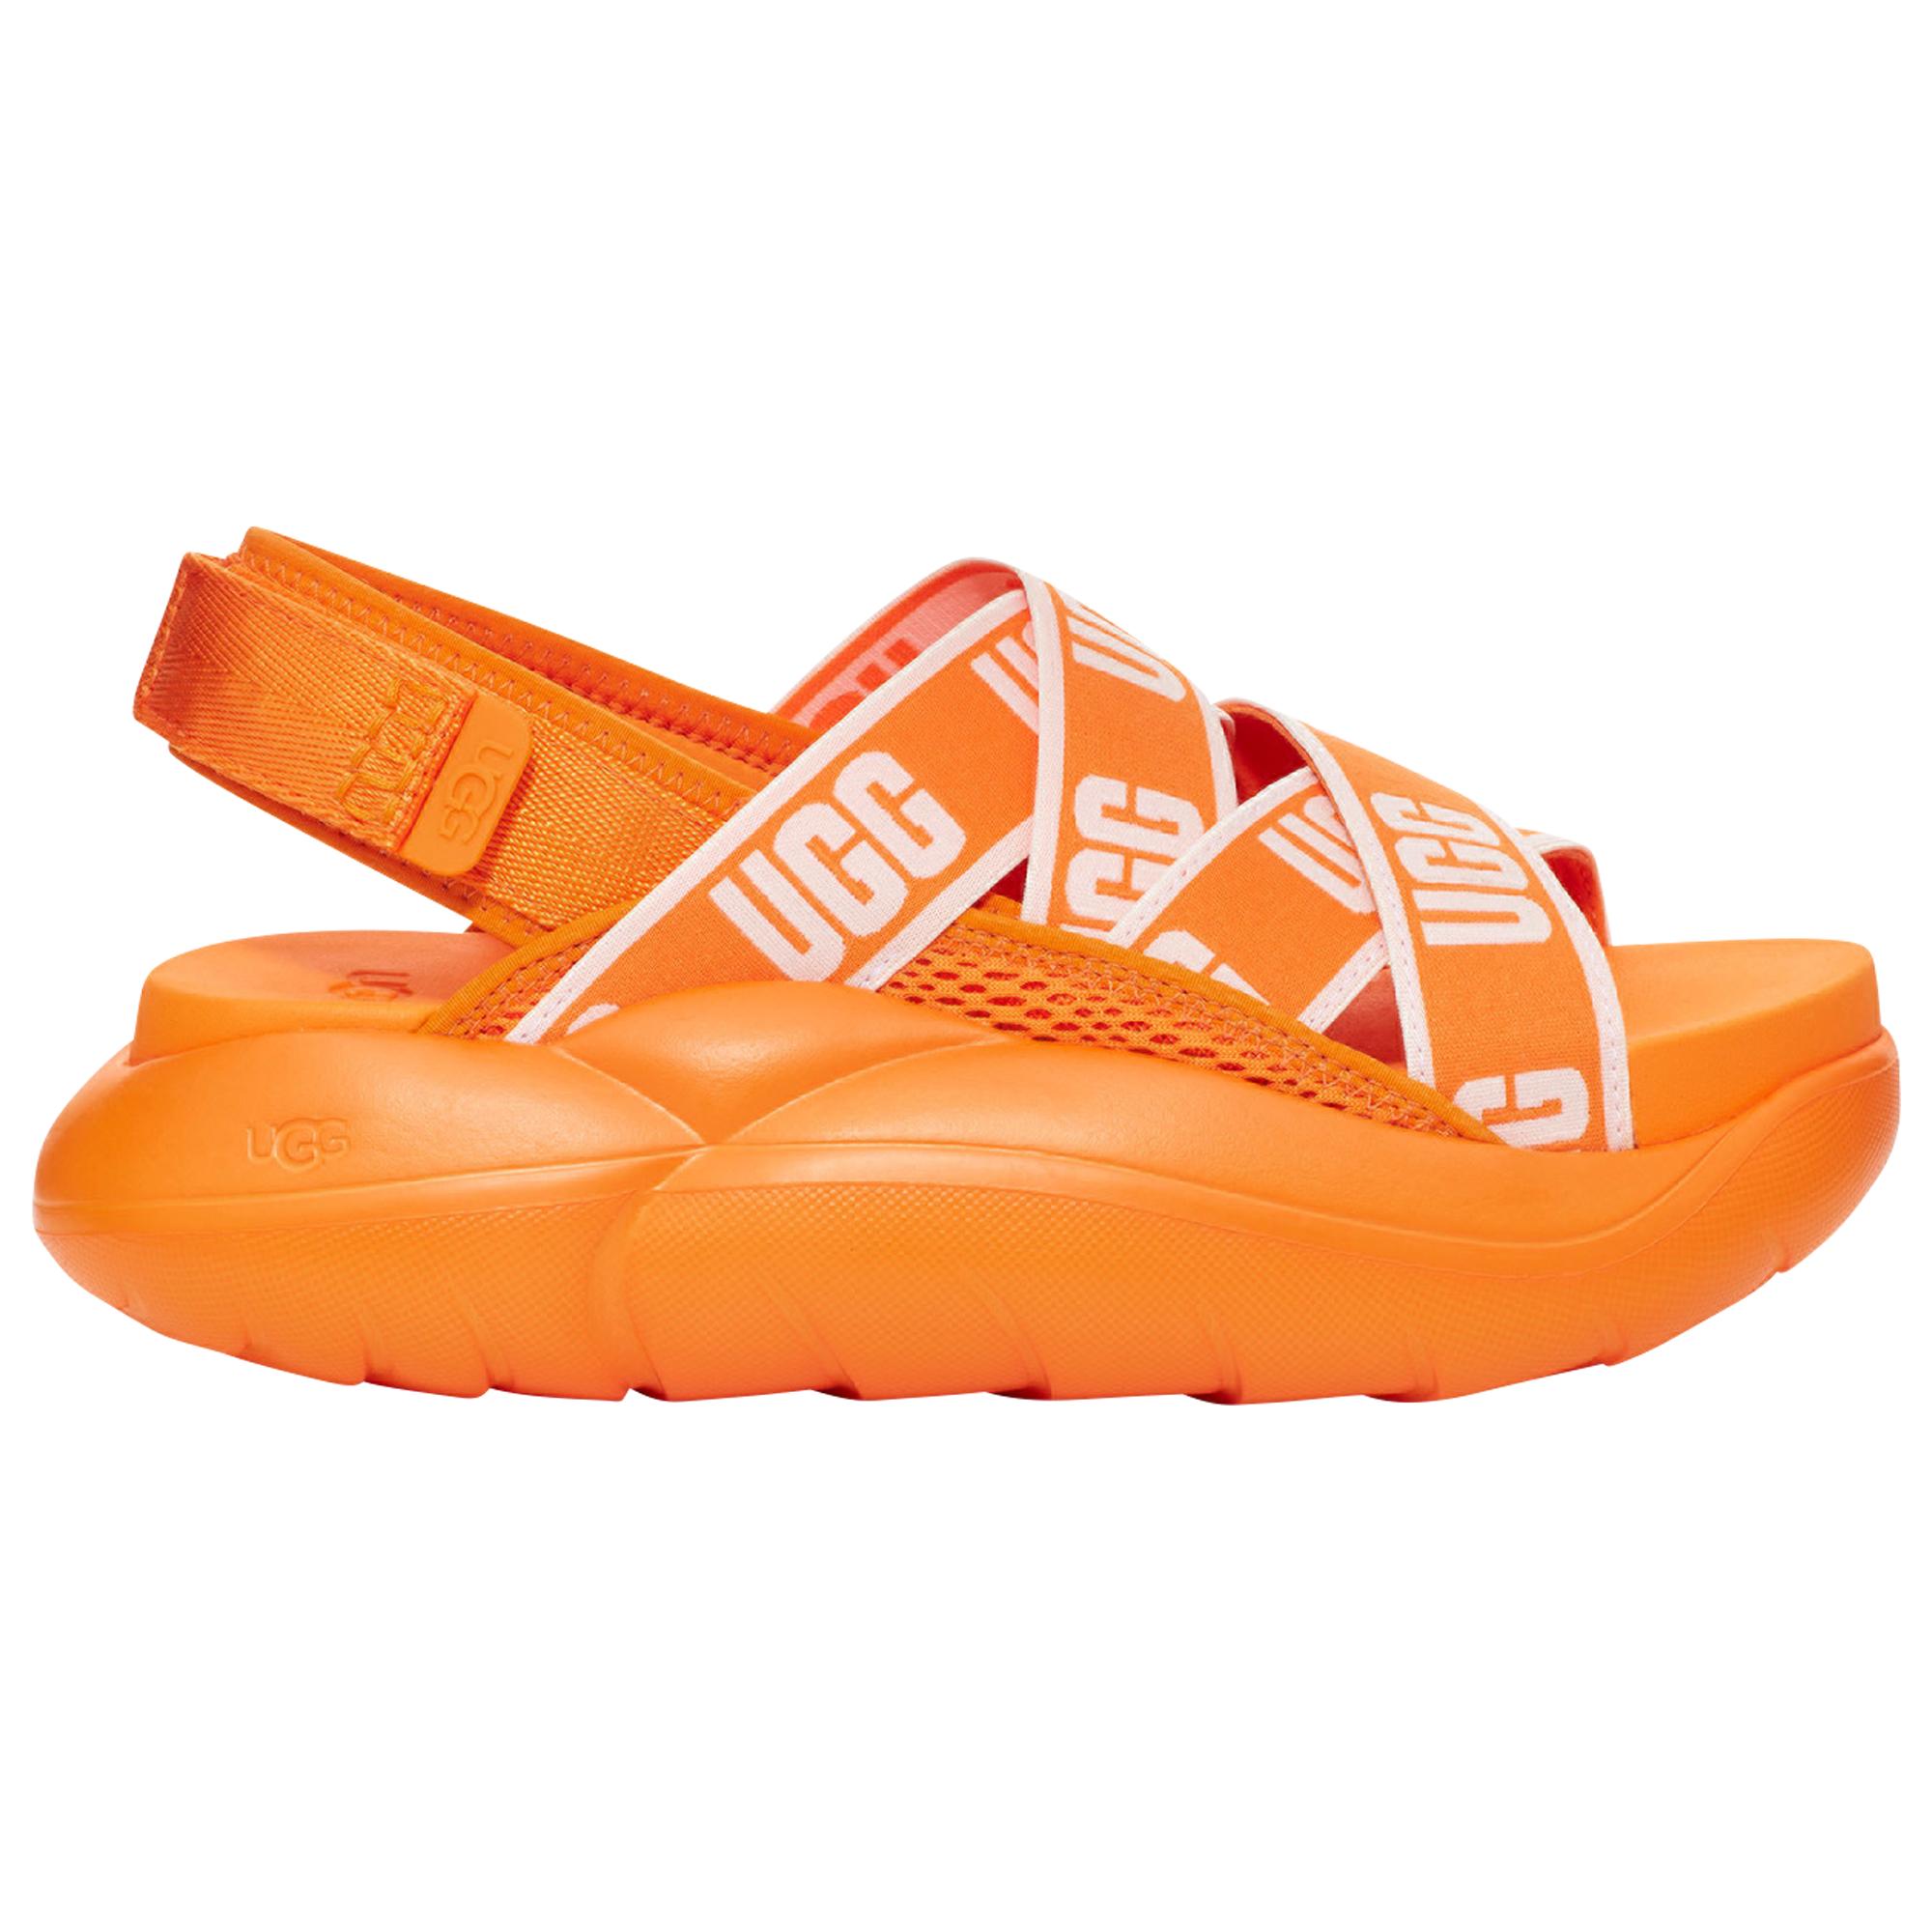 UGG Cloud Sandal in Orange/Orange (Orange) | Lyst